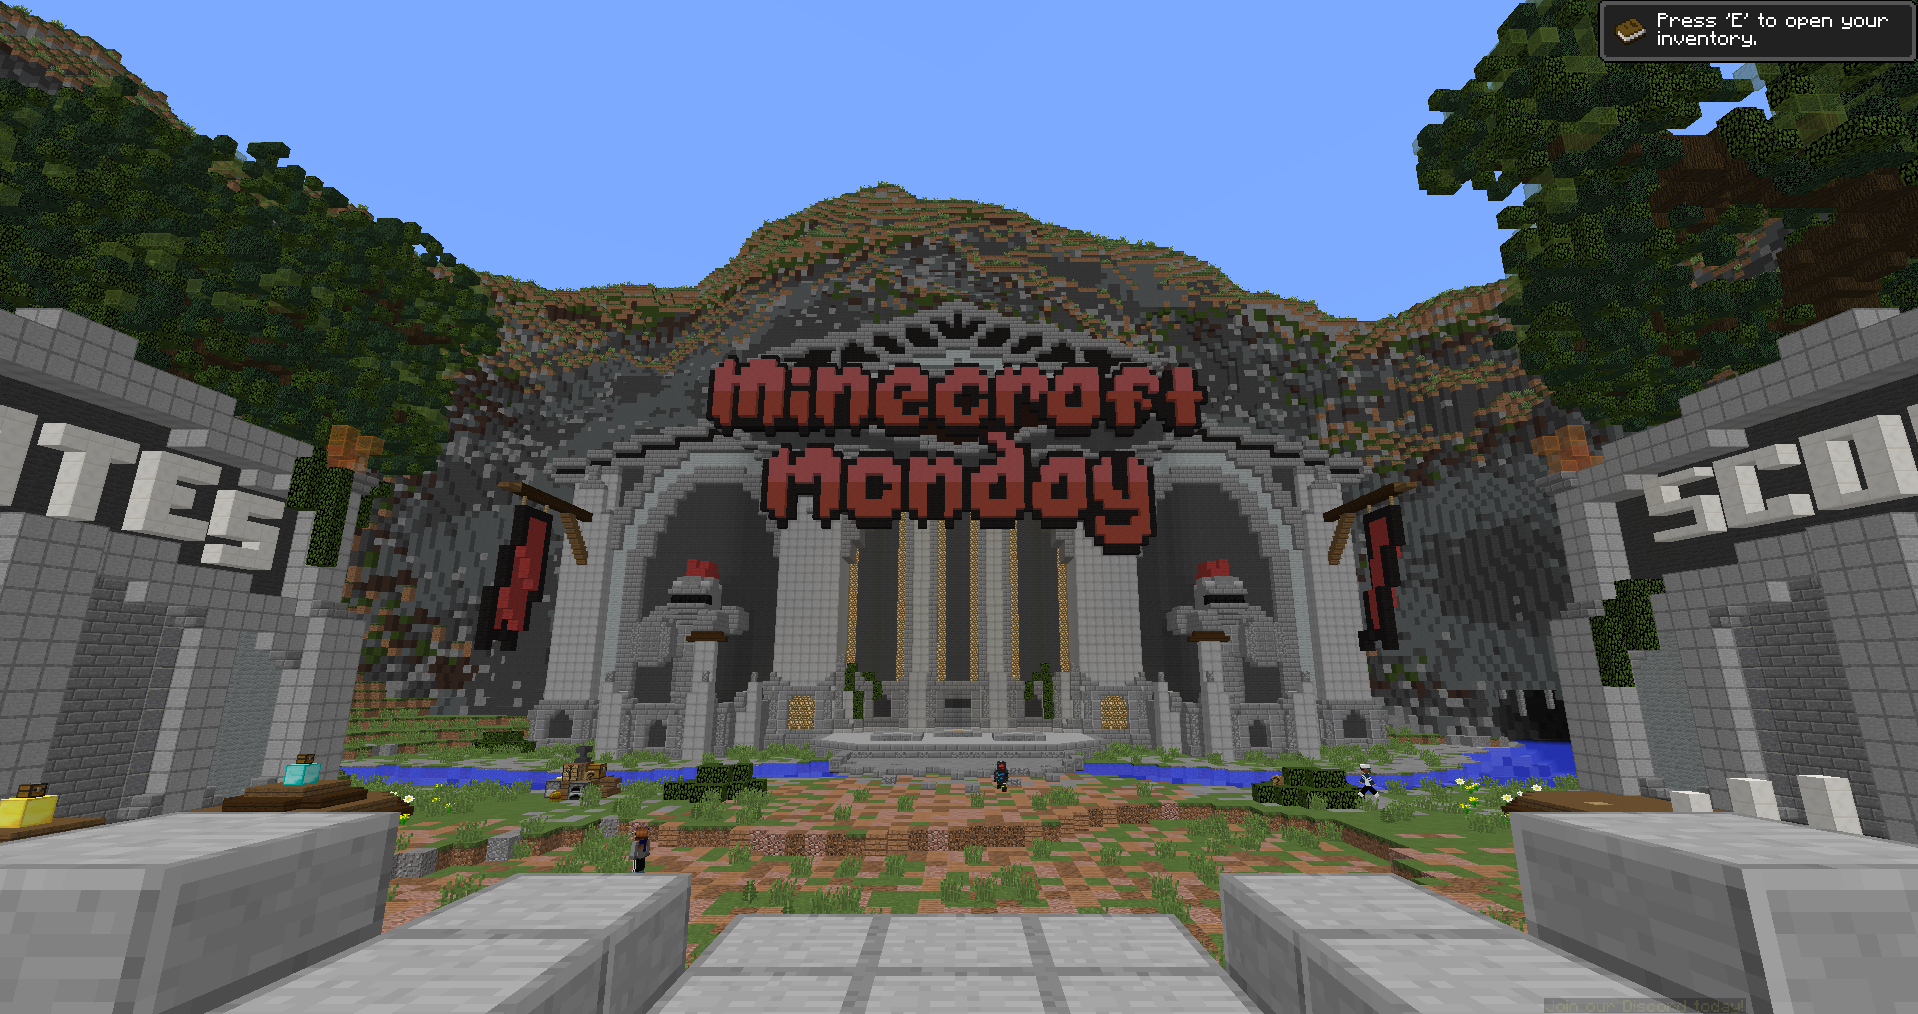 Minecraft Monday Lobby Image